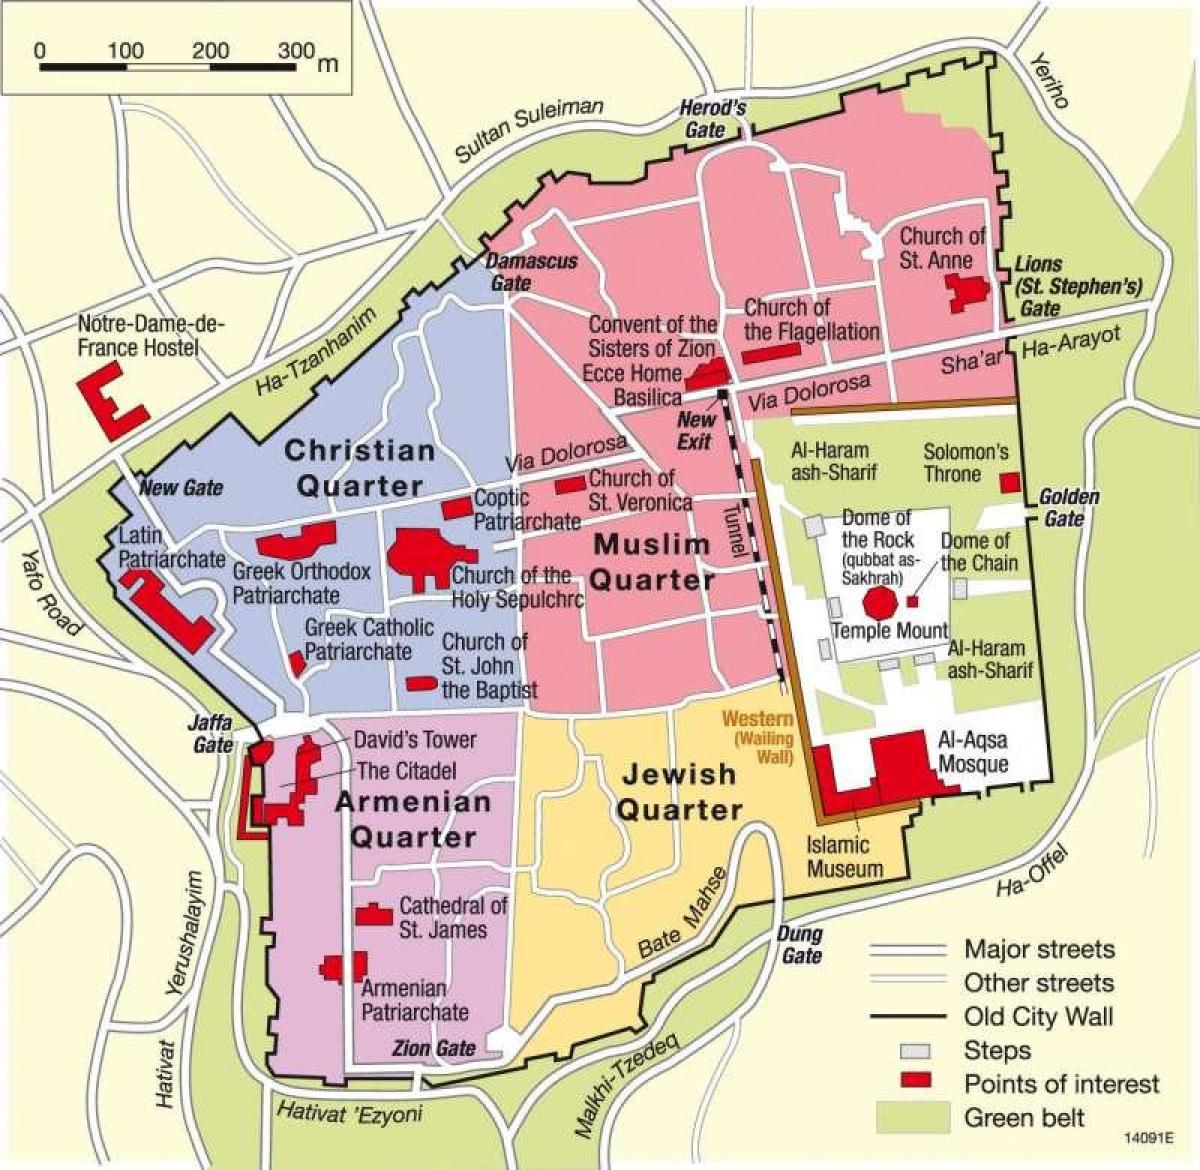 Mappa del quartiere di Gerusalemme